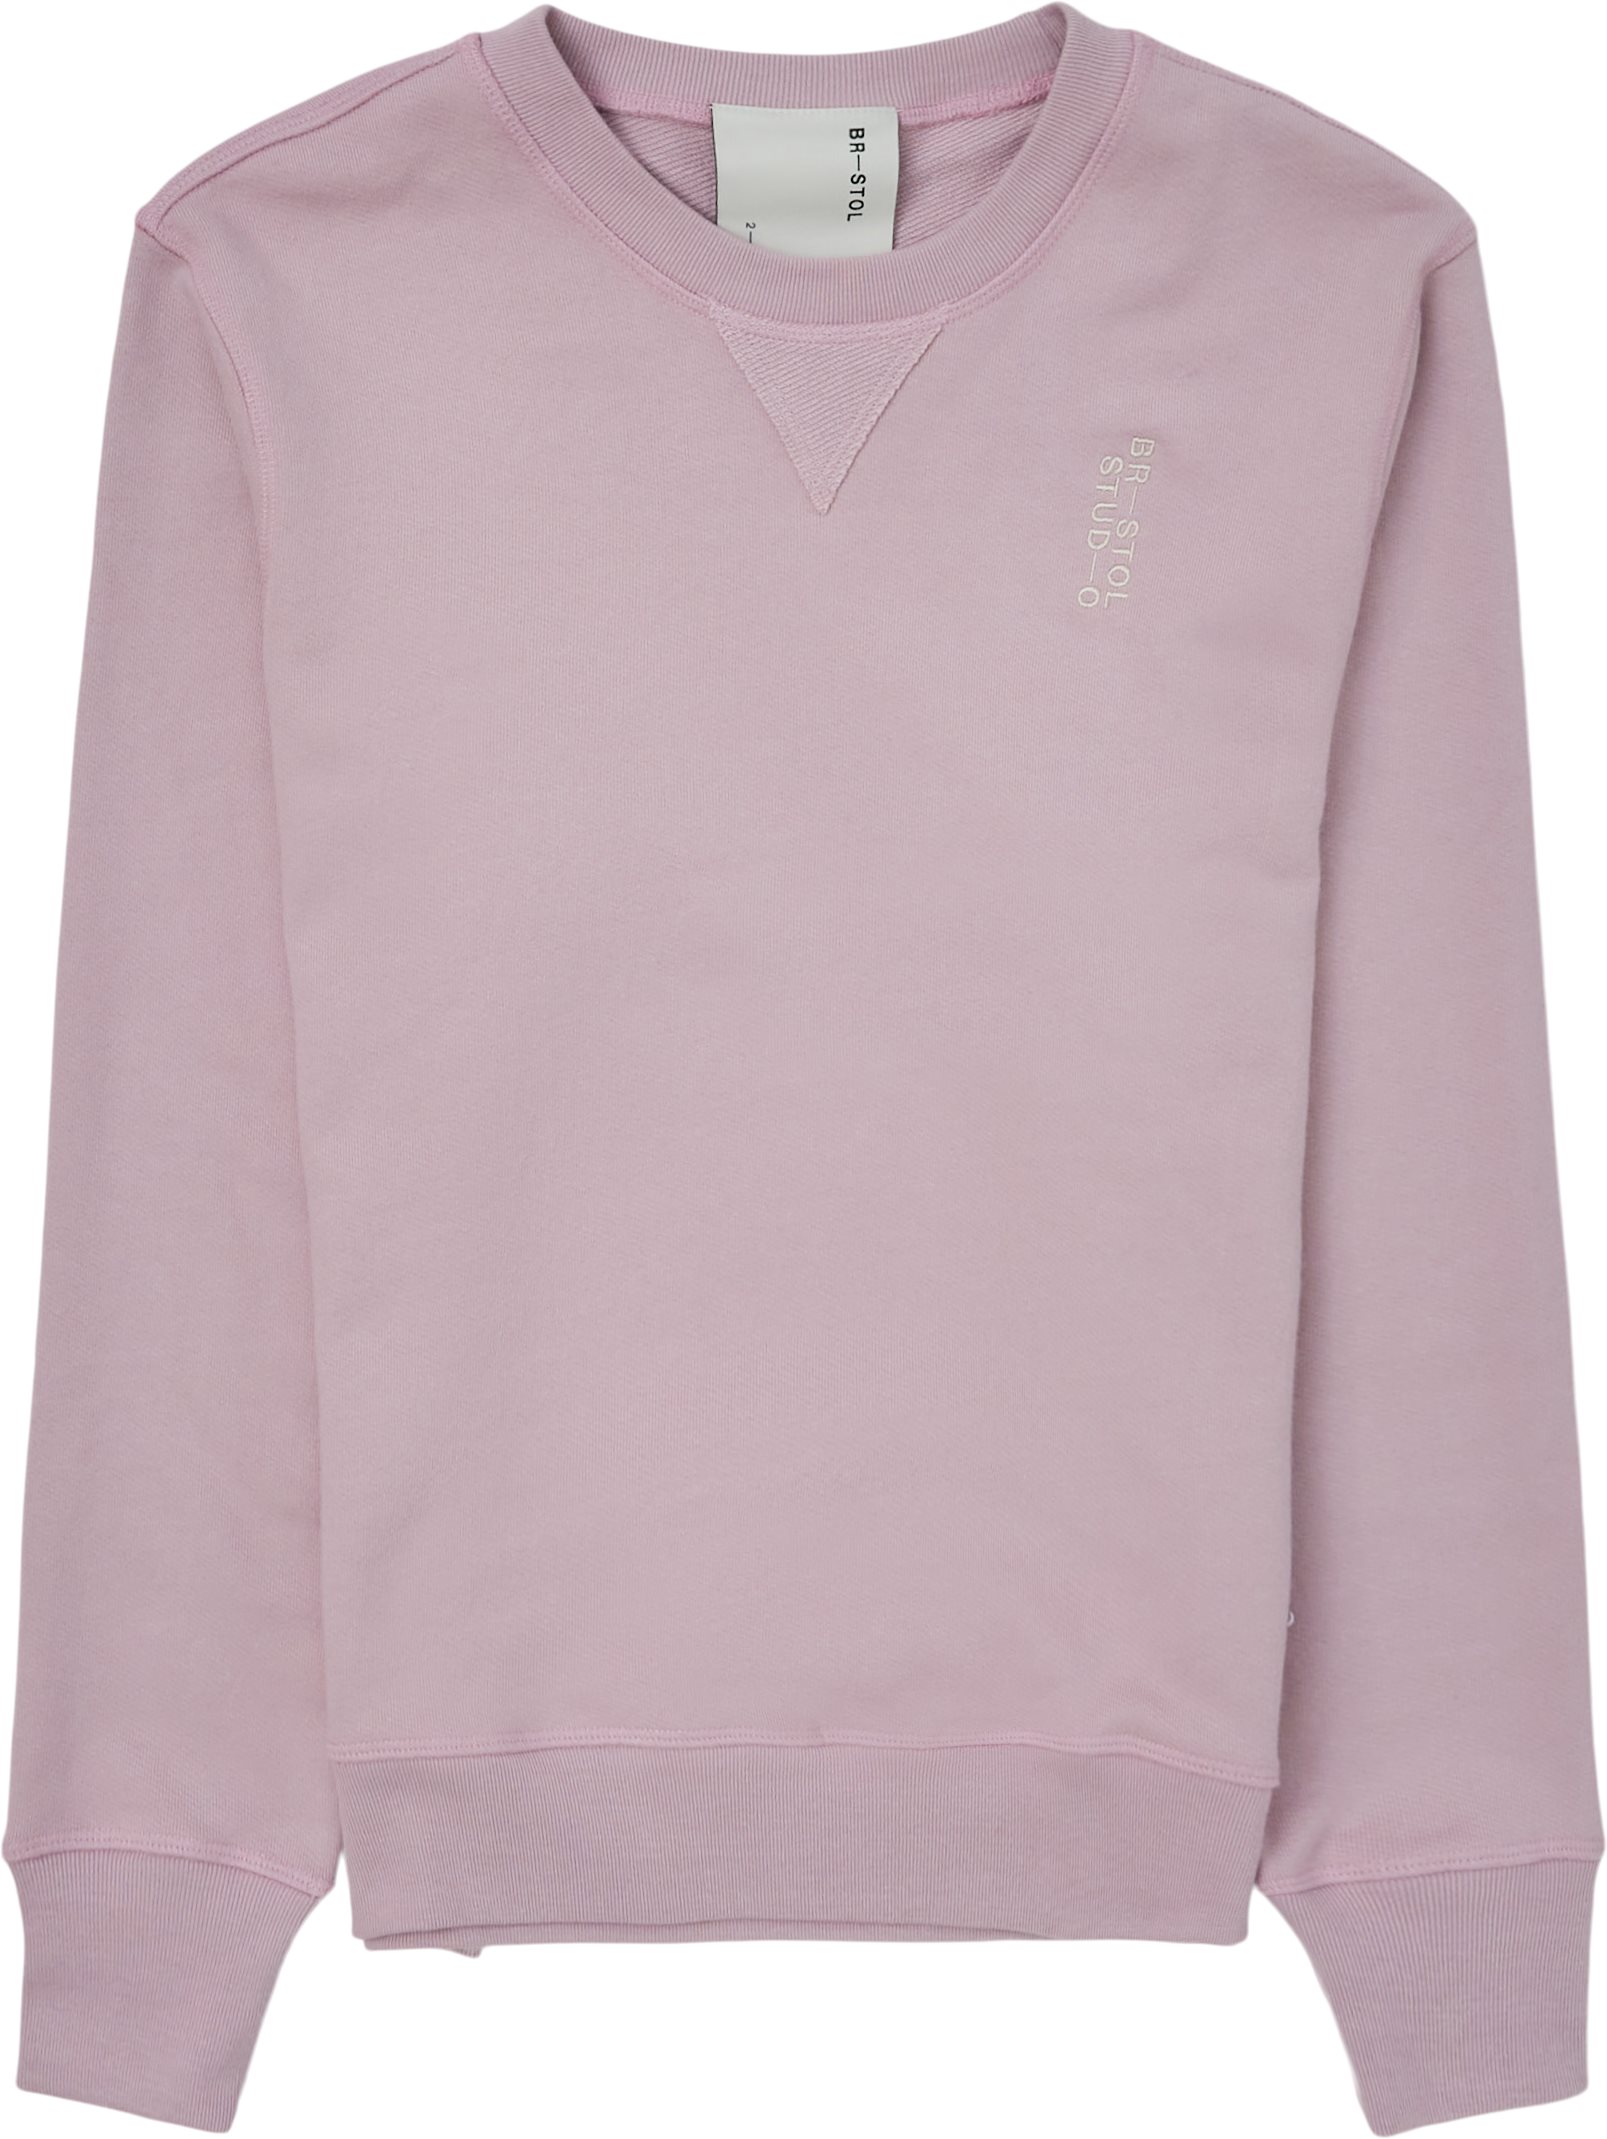 Bristol Studio Sweatshirts SIGNATURE CREWNECK Lilac